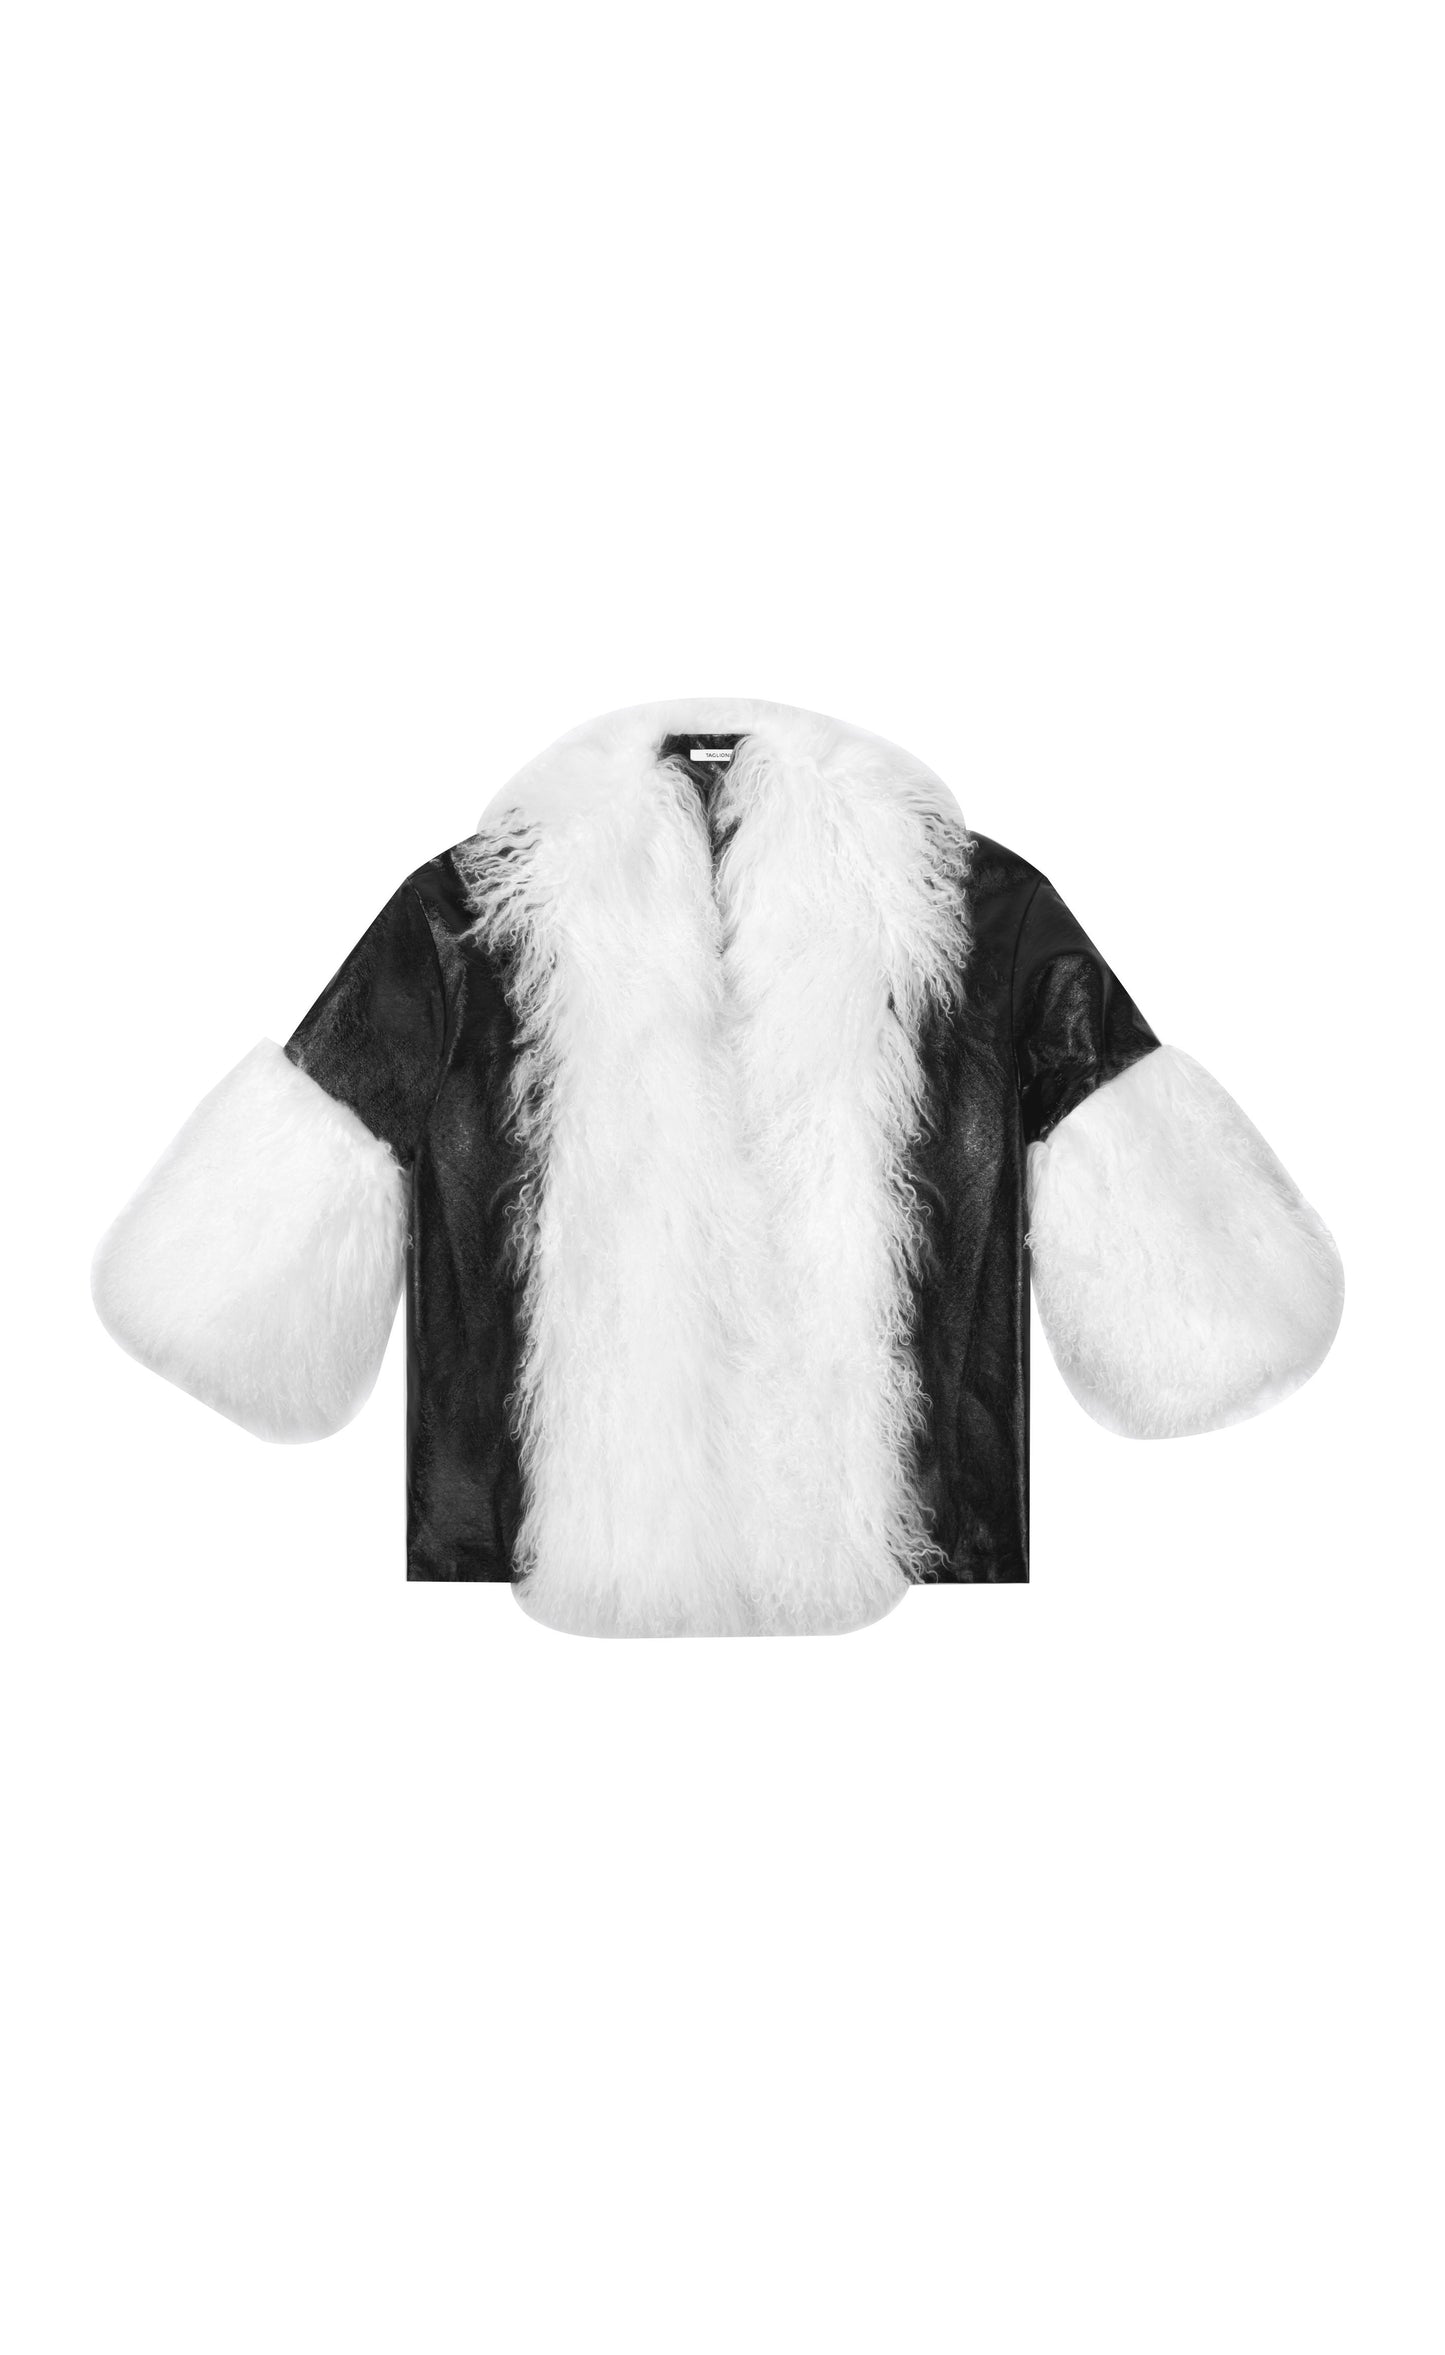 TAGLIONI Colorblock Fur Coat